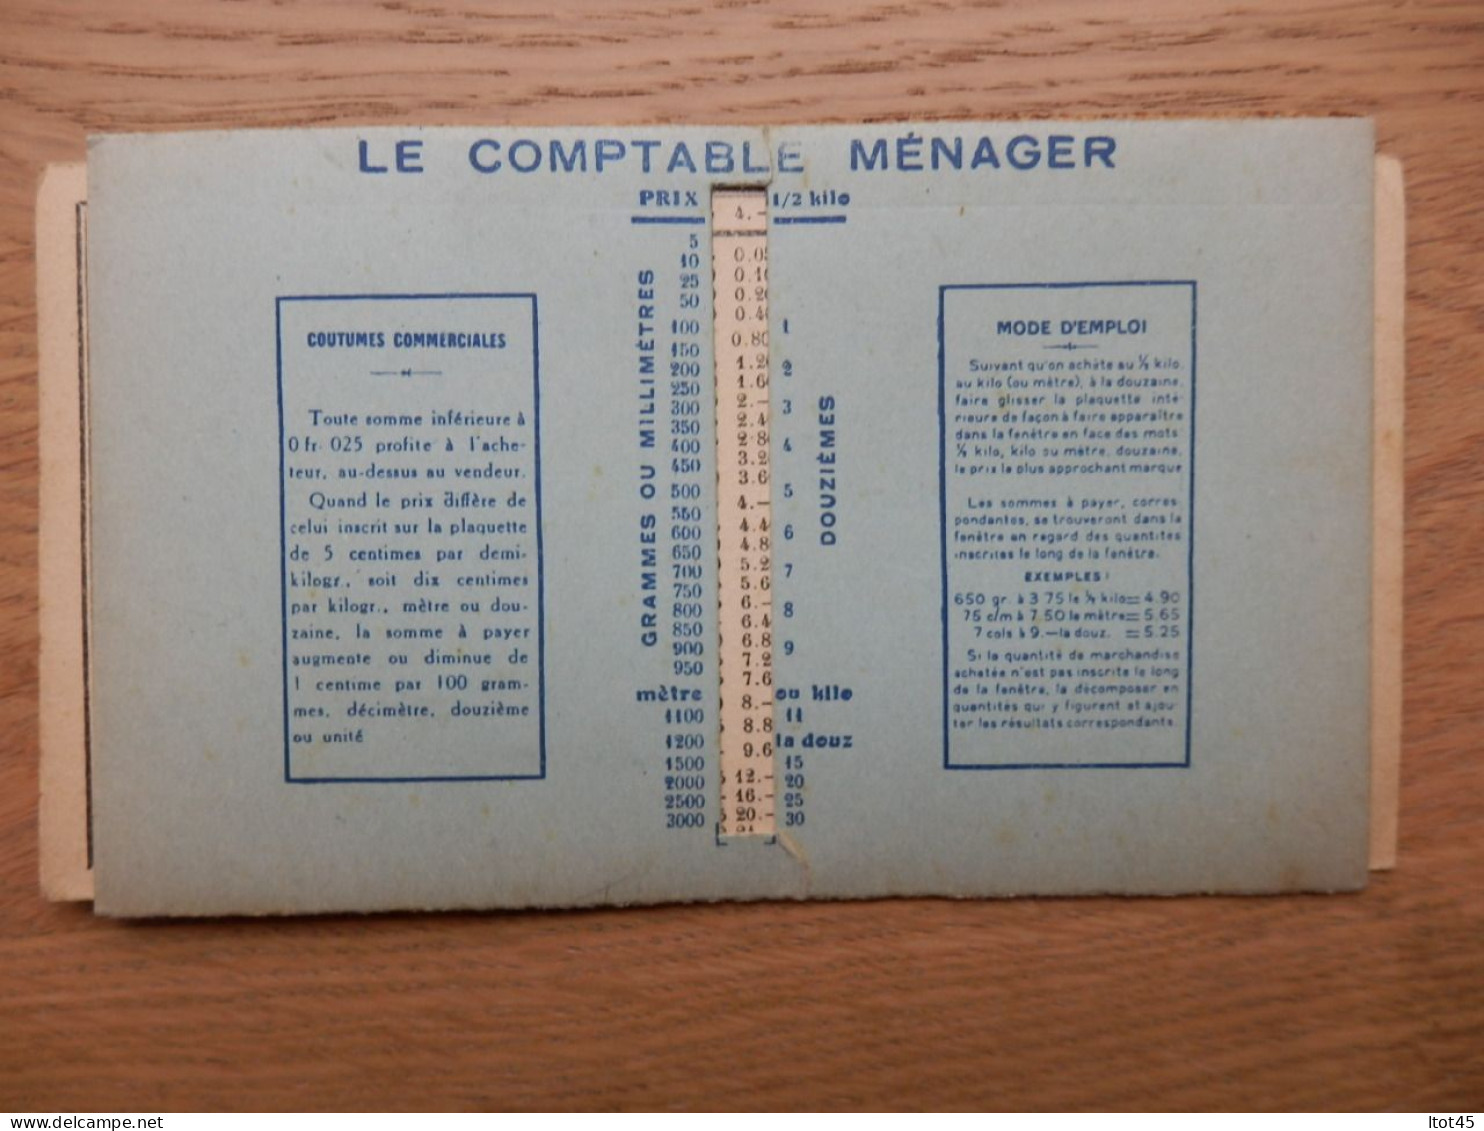 CARTE LE COMPTABLE MENAGER MEDAILLE DE VERMEIL CONCOURS LEPINE 1925 - Materiale E Accessori